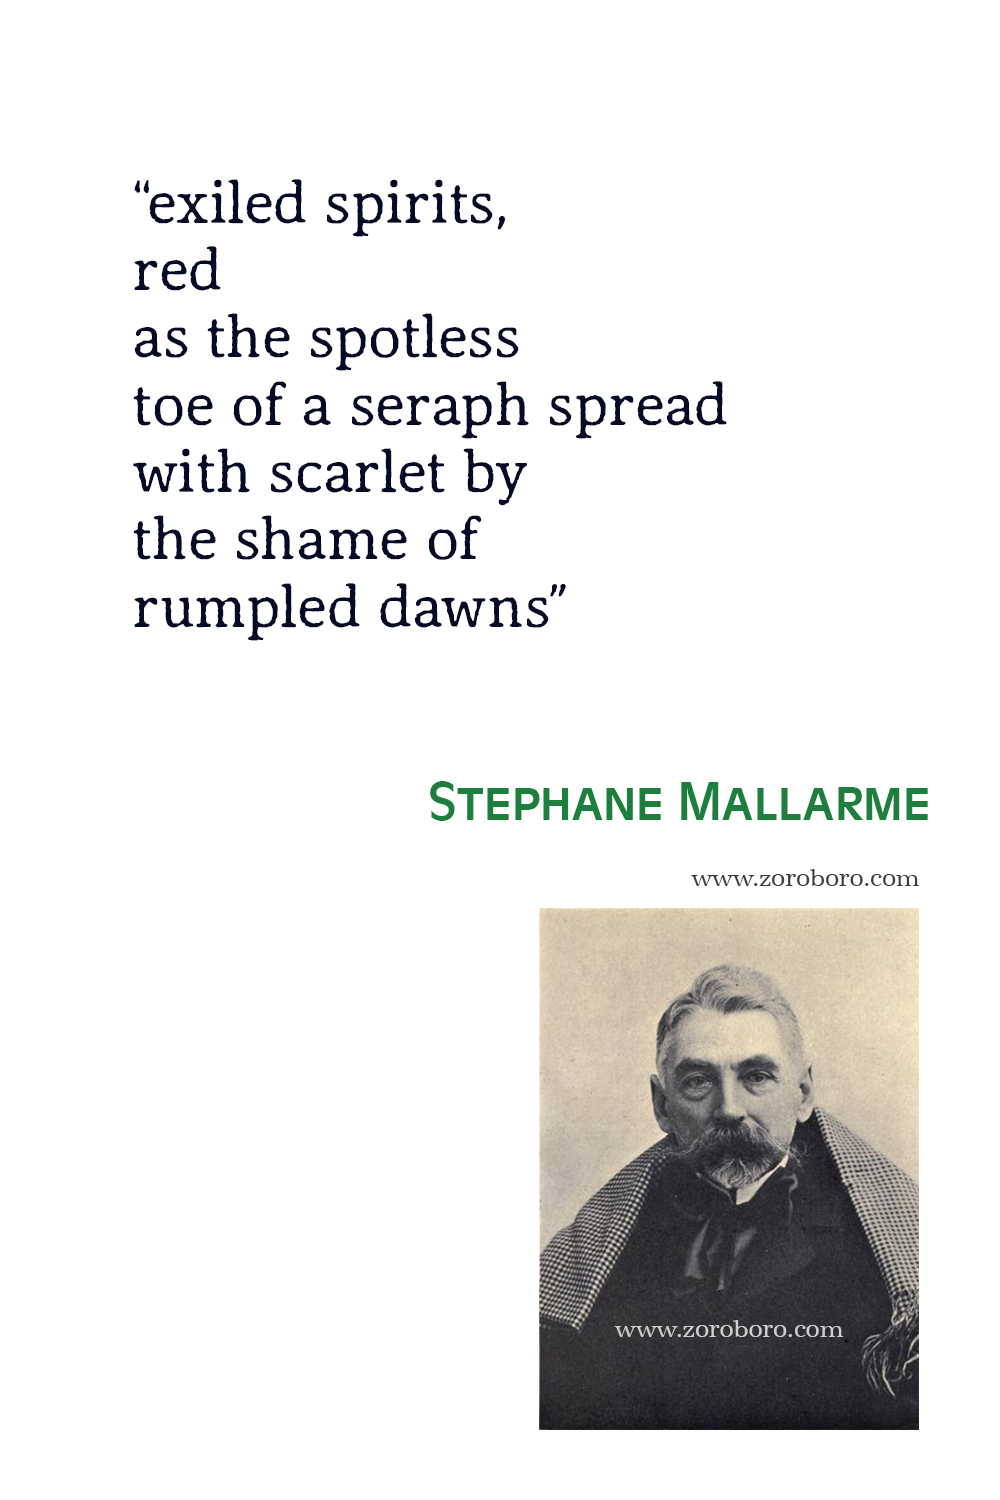 Stephane Mallarme Quotes, Poet, Stephane Mallarme Poetry, Stephane Mallarme Poems, Stéphane Mallarmé Books Quotes, Stéphane Mallarmé : Selected Poems.